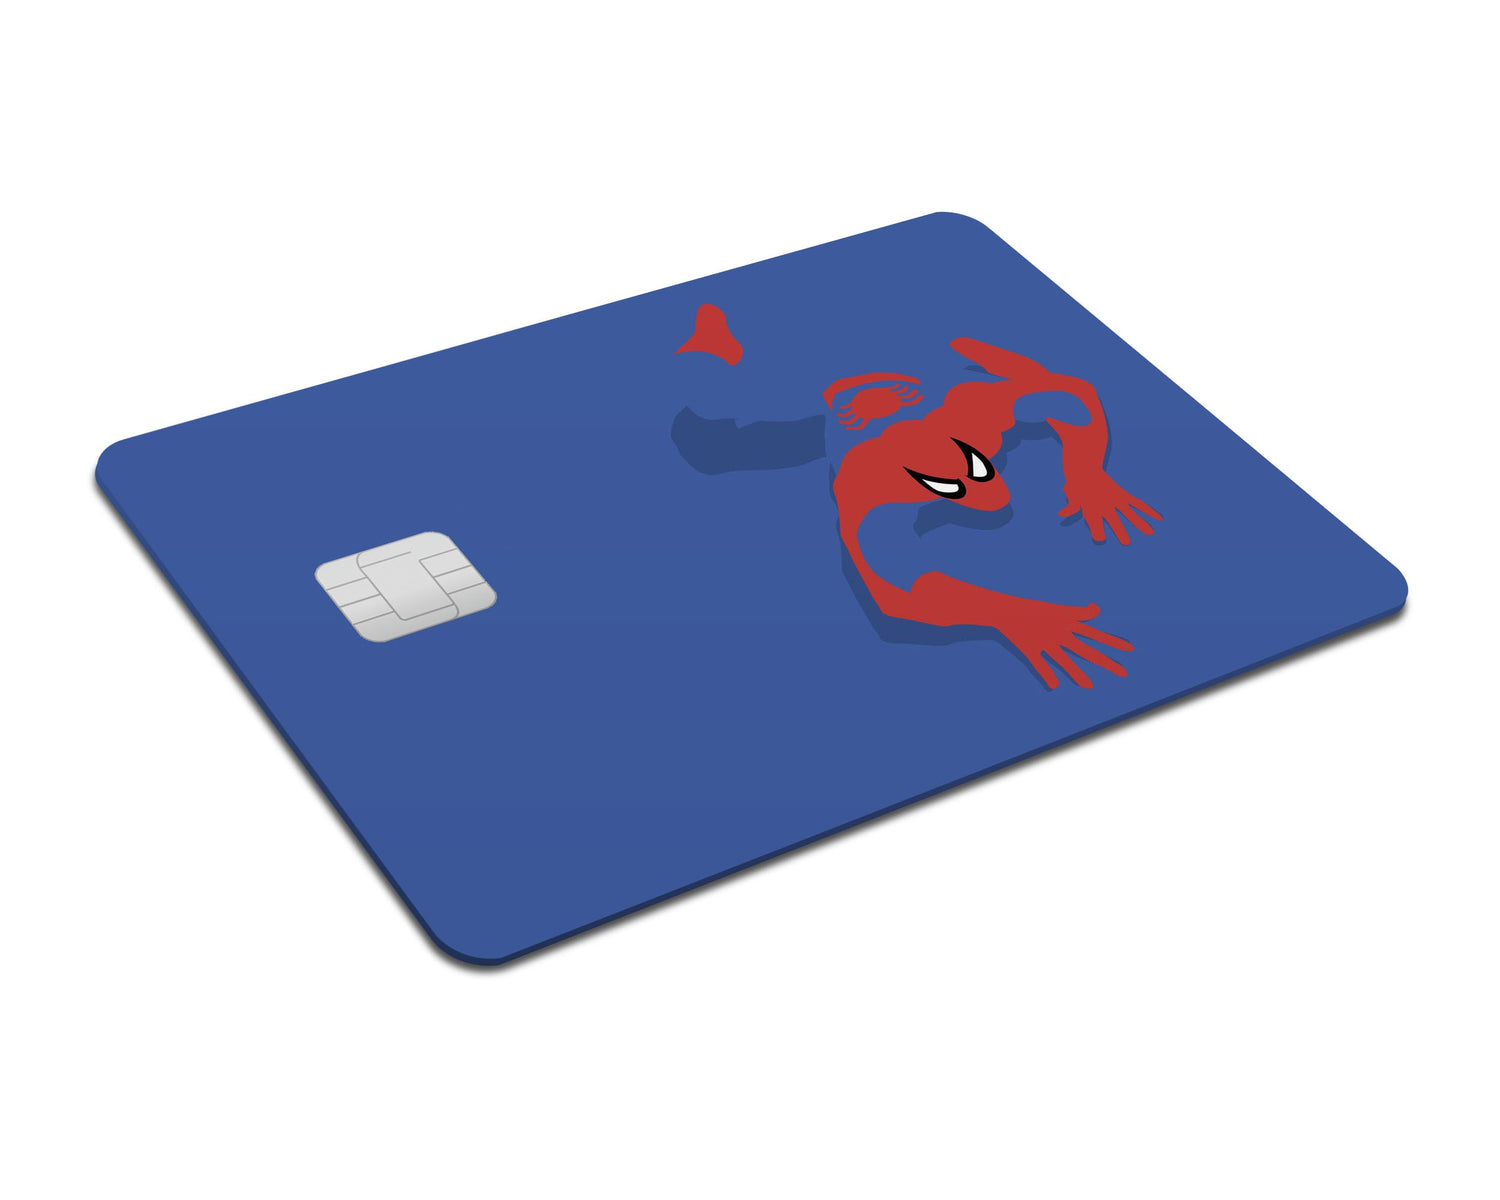 Flex Designs Credit Card Spiderman Minimalist Full Skins - Superhero Spiderman & Debit Card Skin